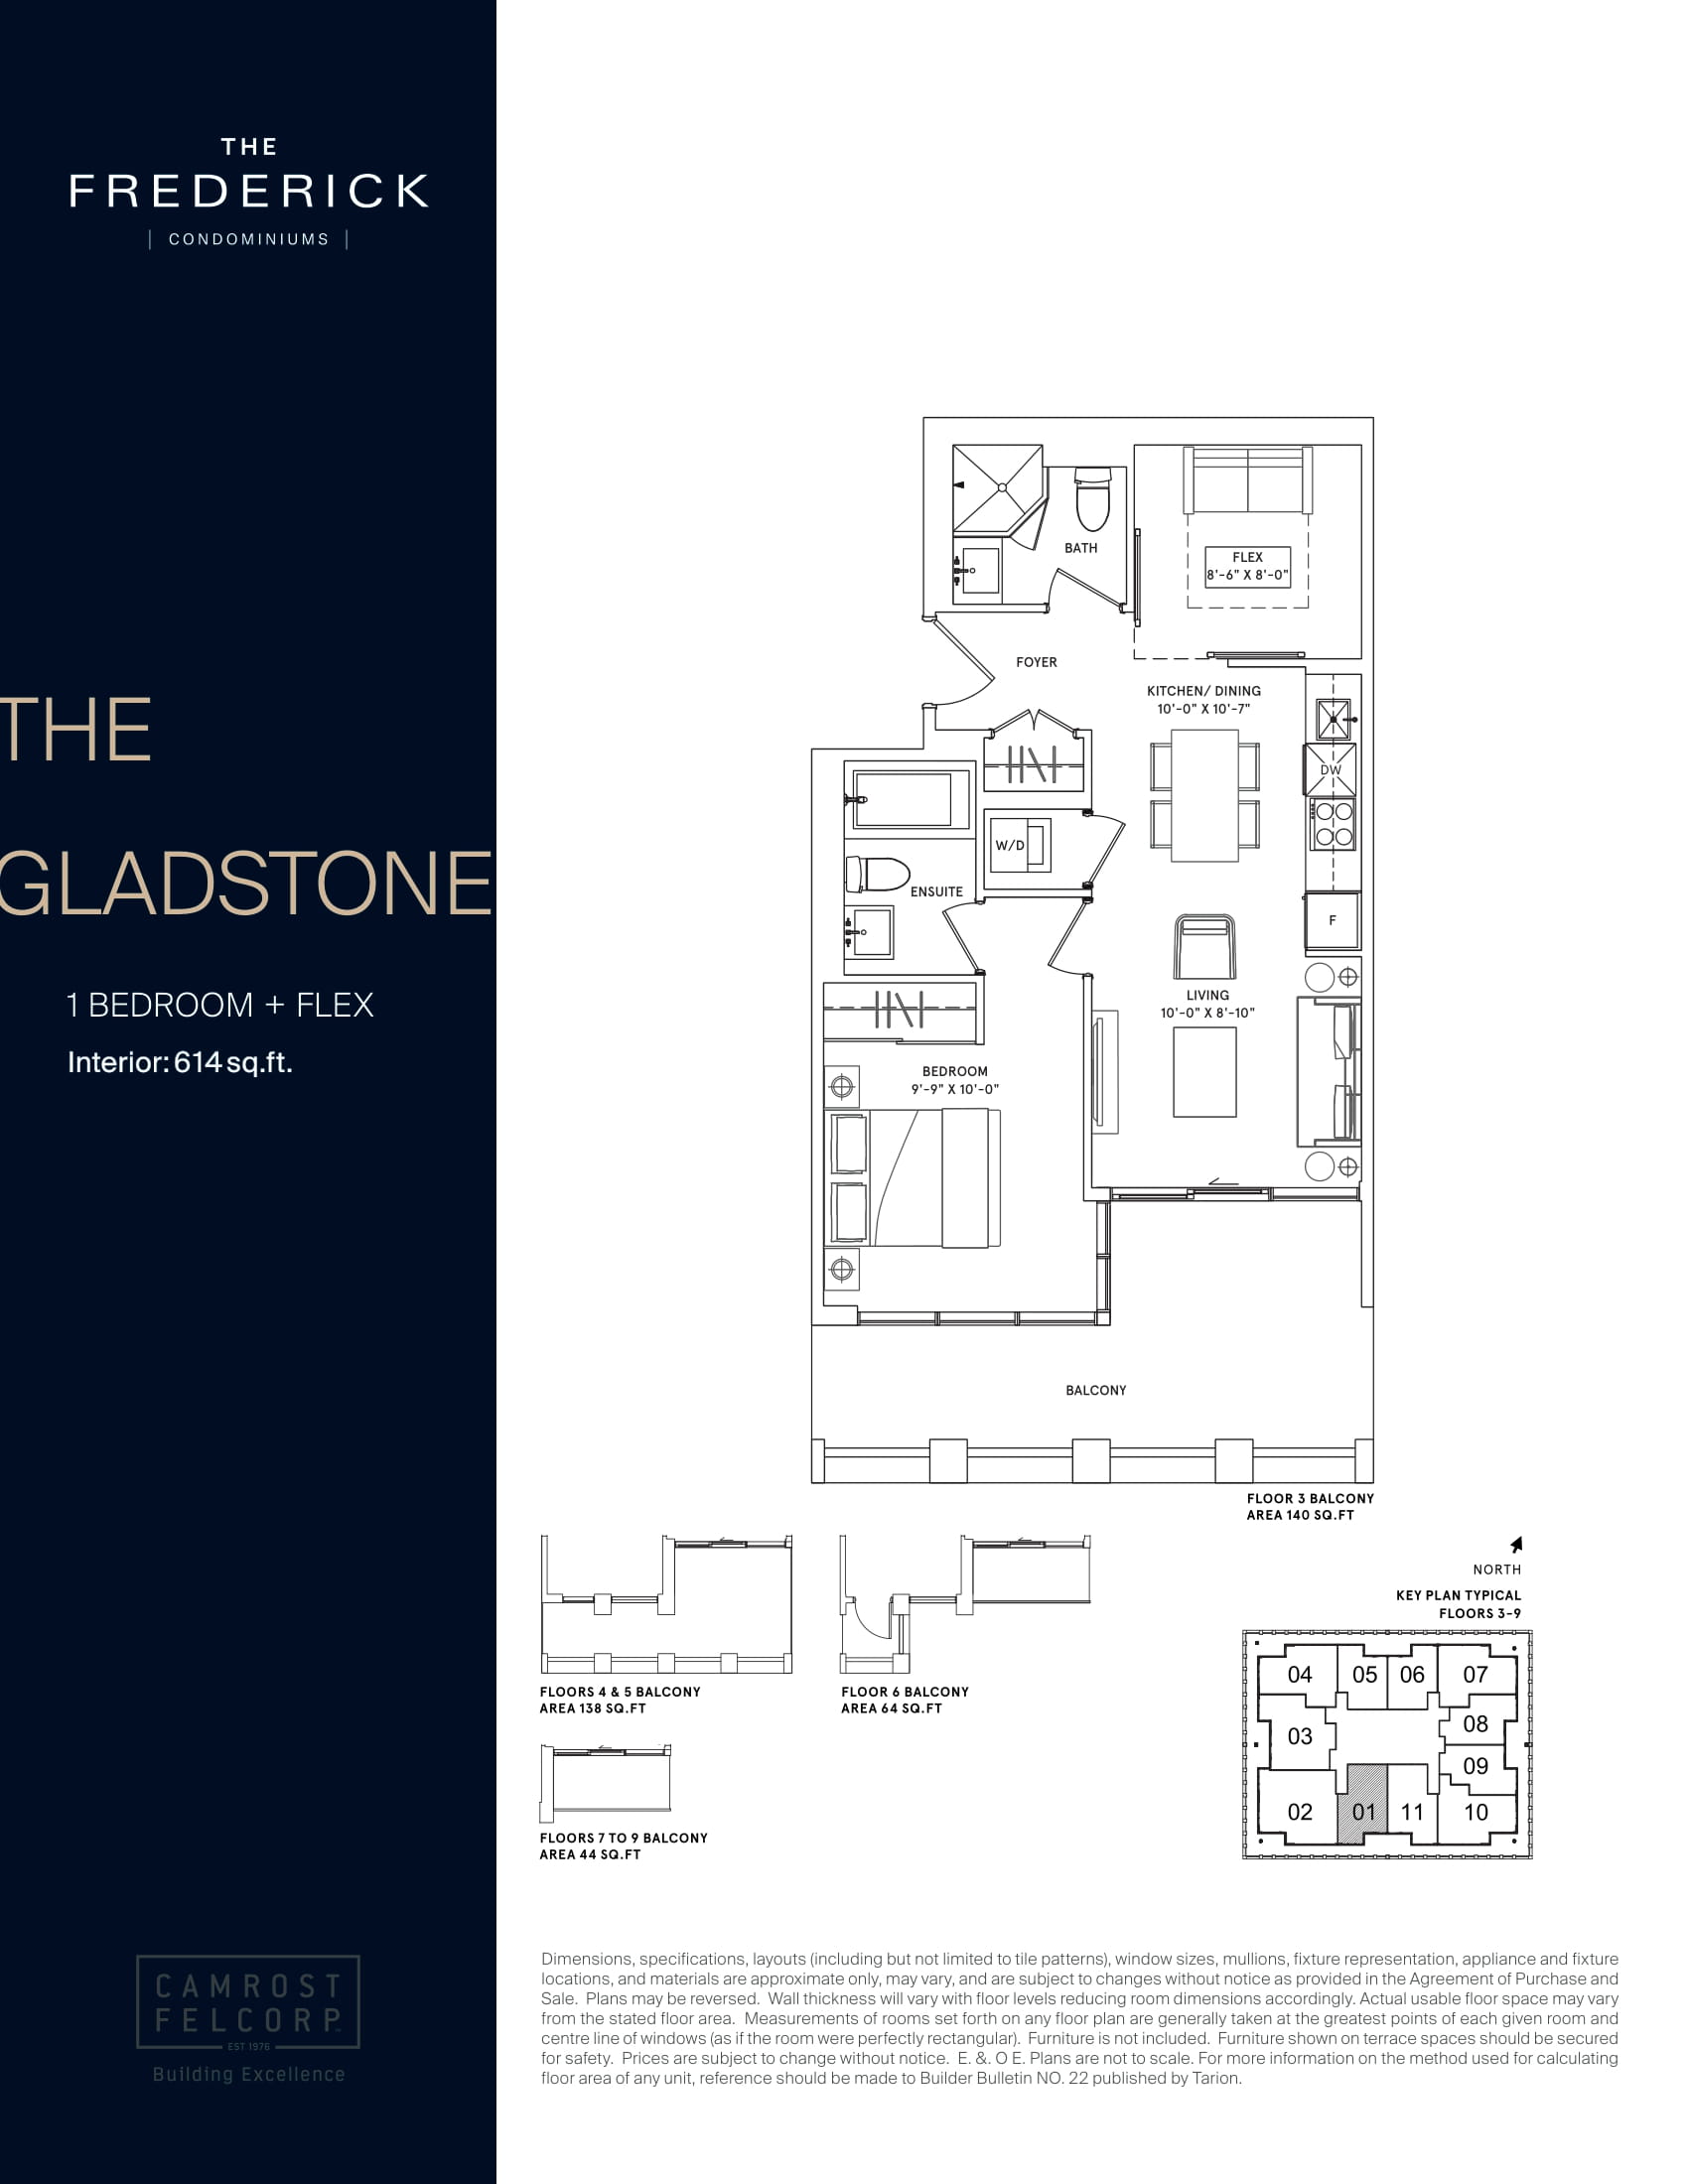 The Gladstone